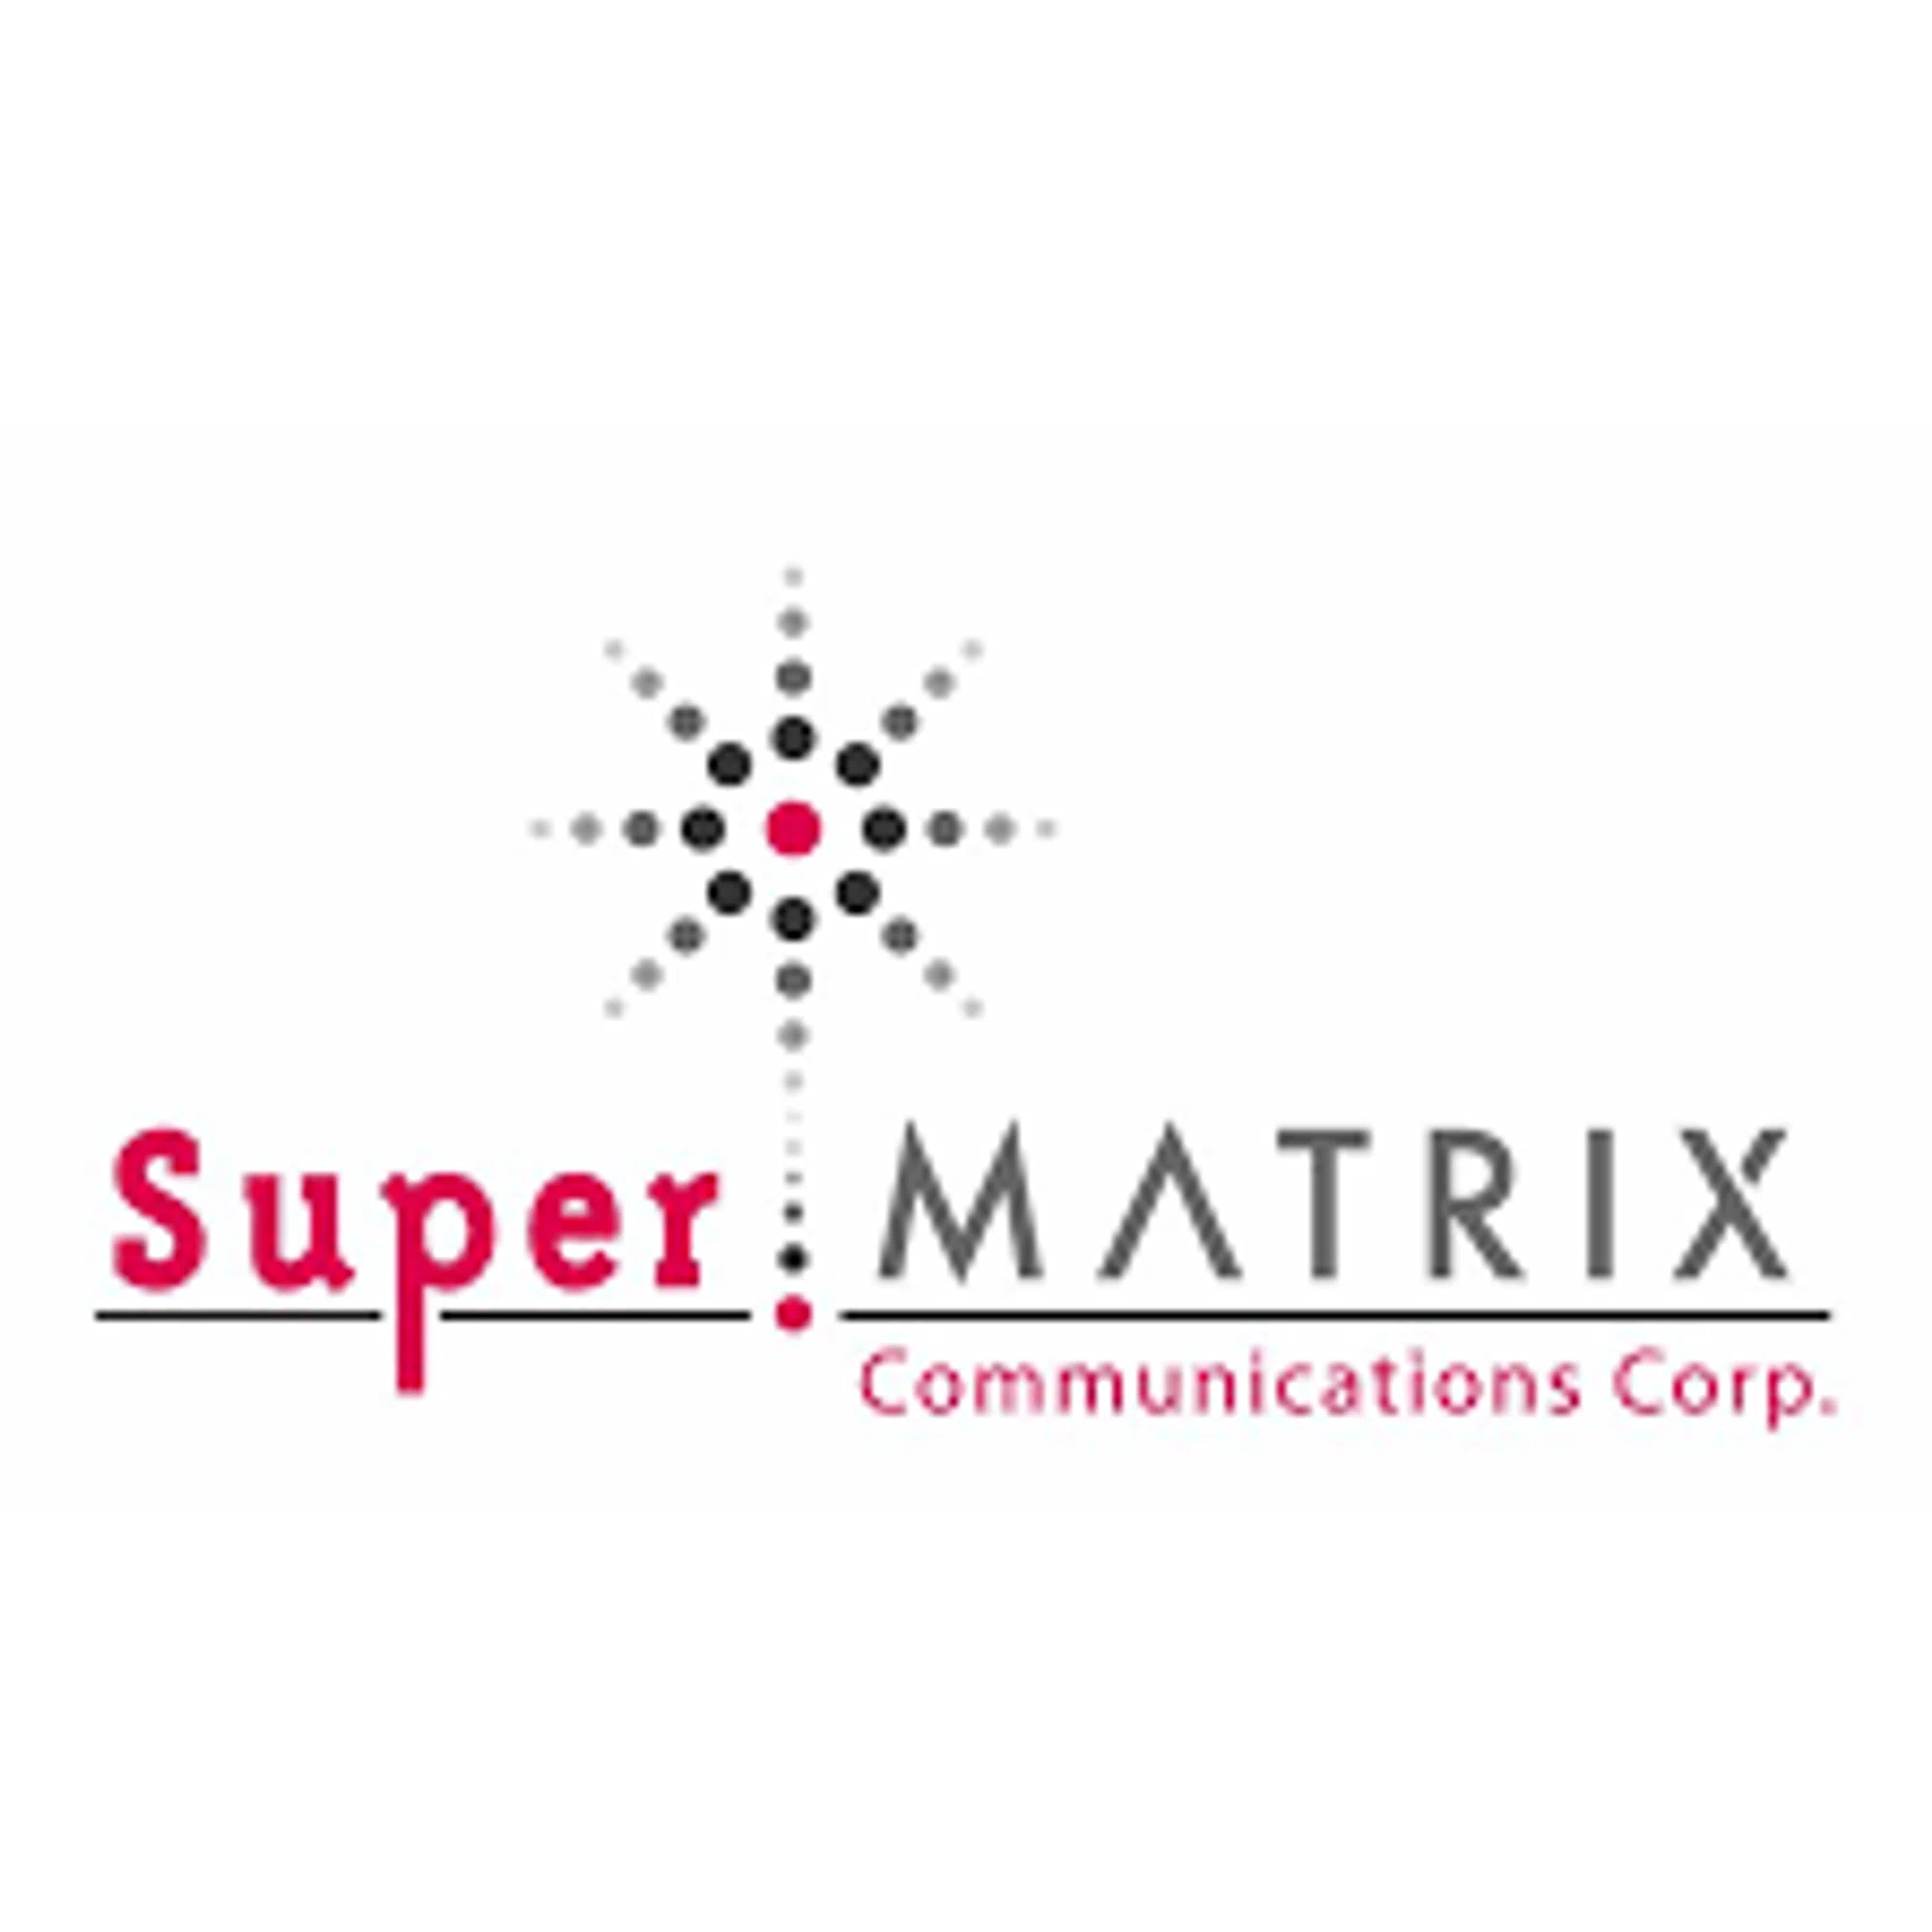 SuperMATRIX Communications